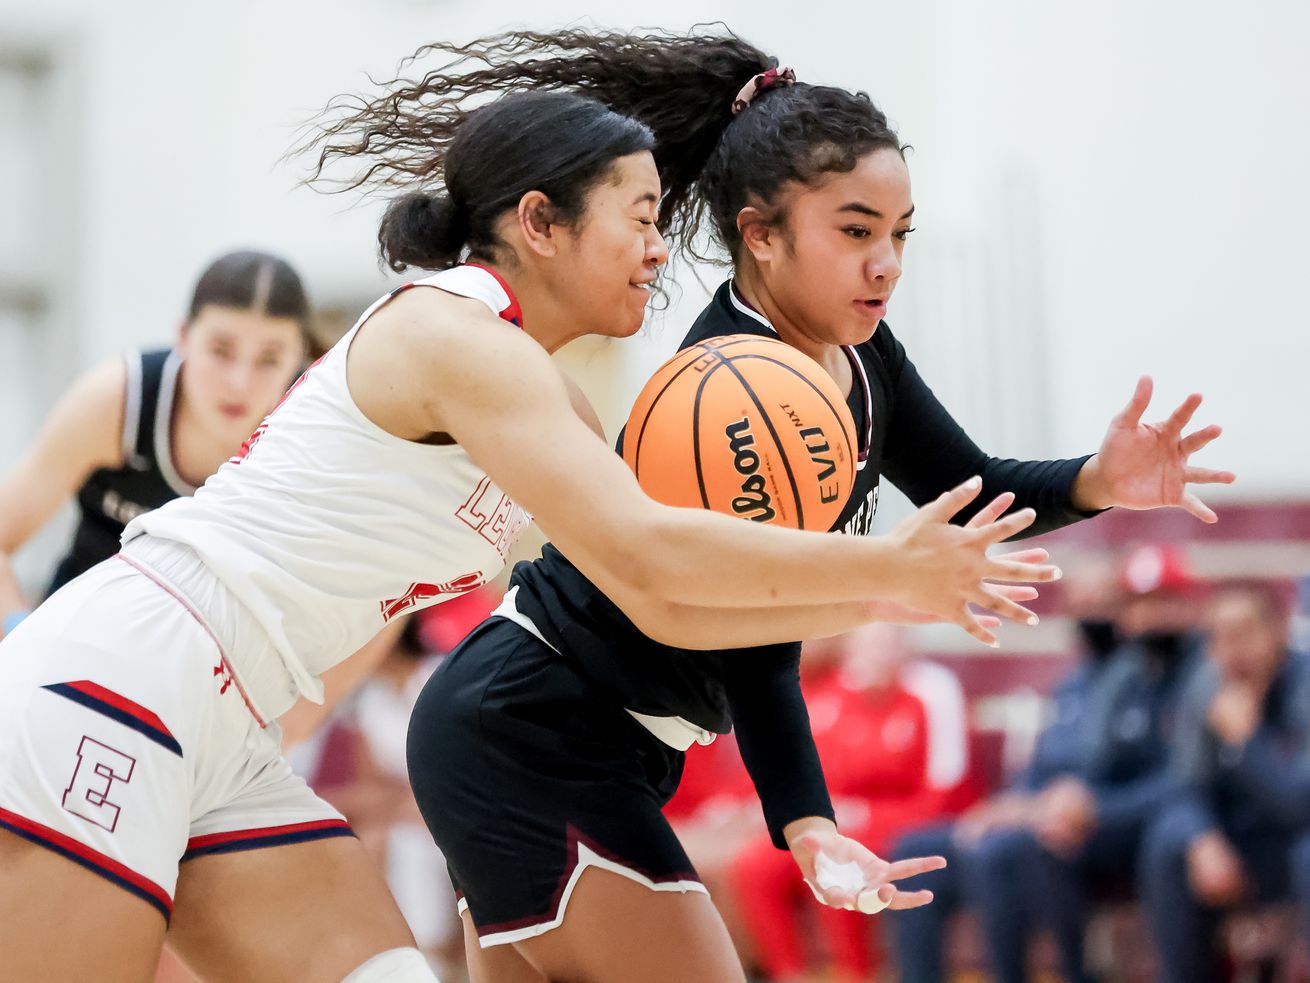 East’s Sila Tuakoi and Lone Peak’s Makeili Ika chase the ball in a girls basketball game at East High School in Salt Lake City on Tuesday, Dec. 7, 2021.